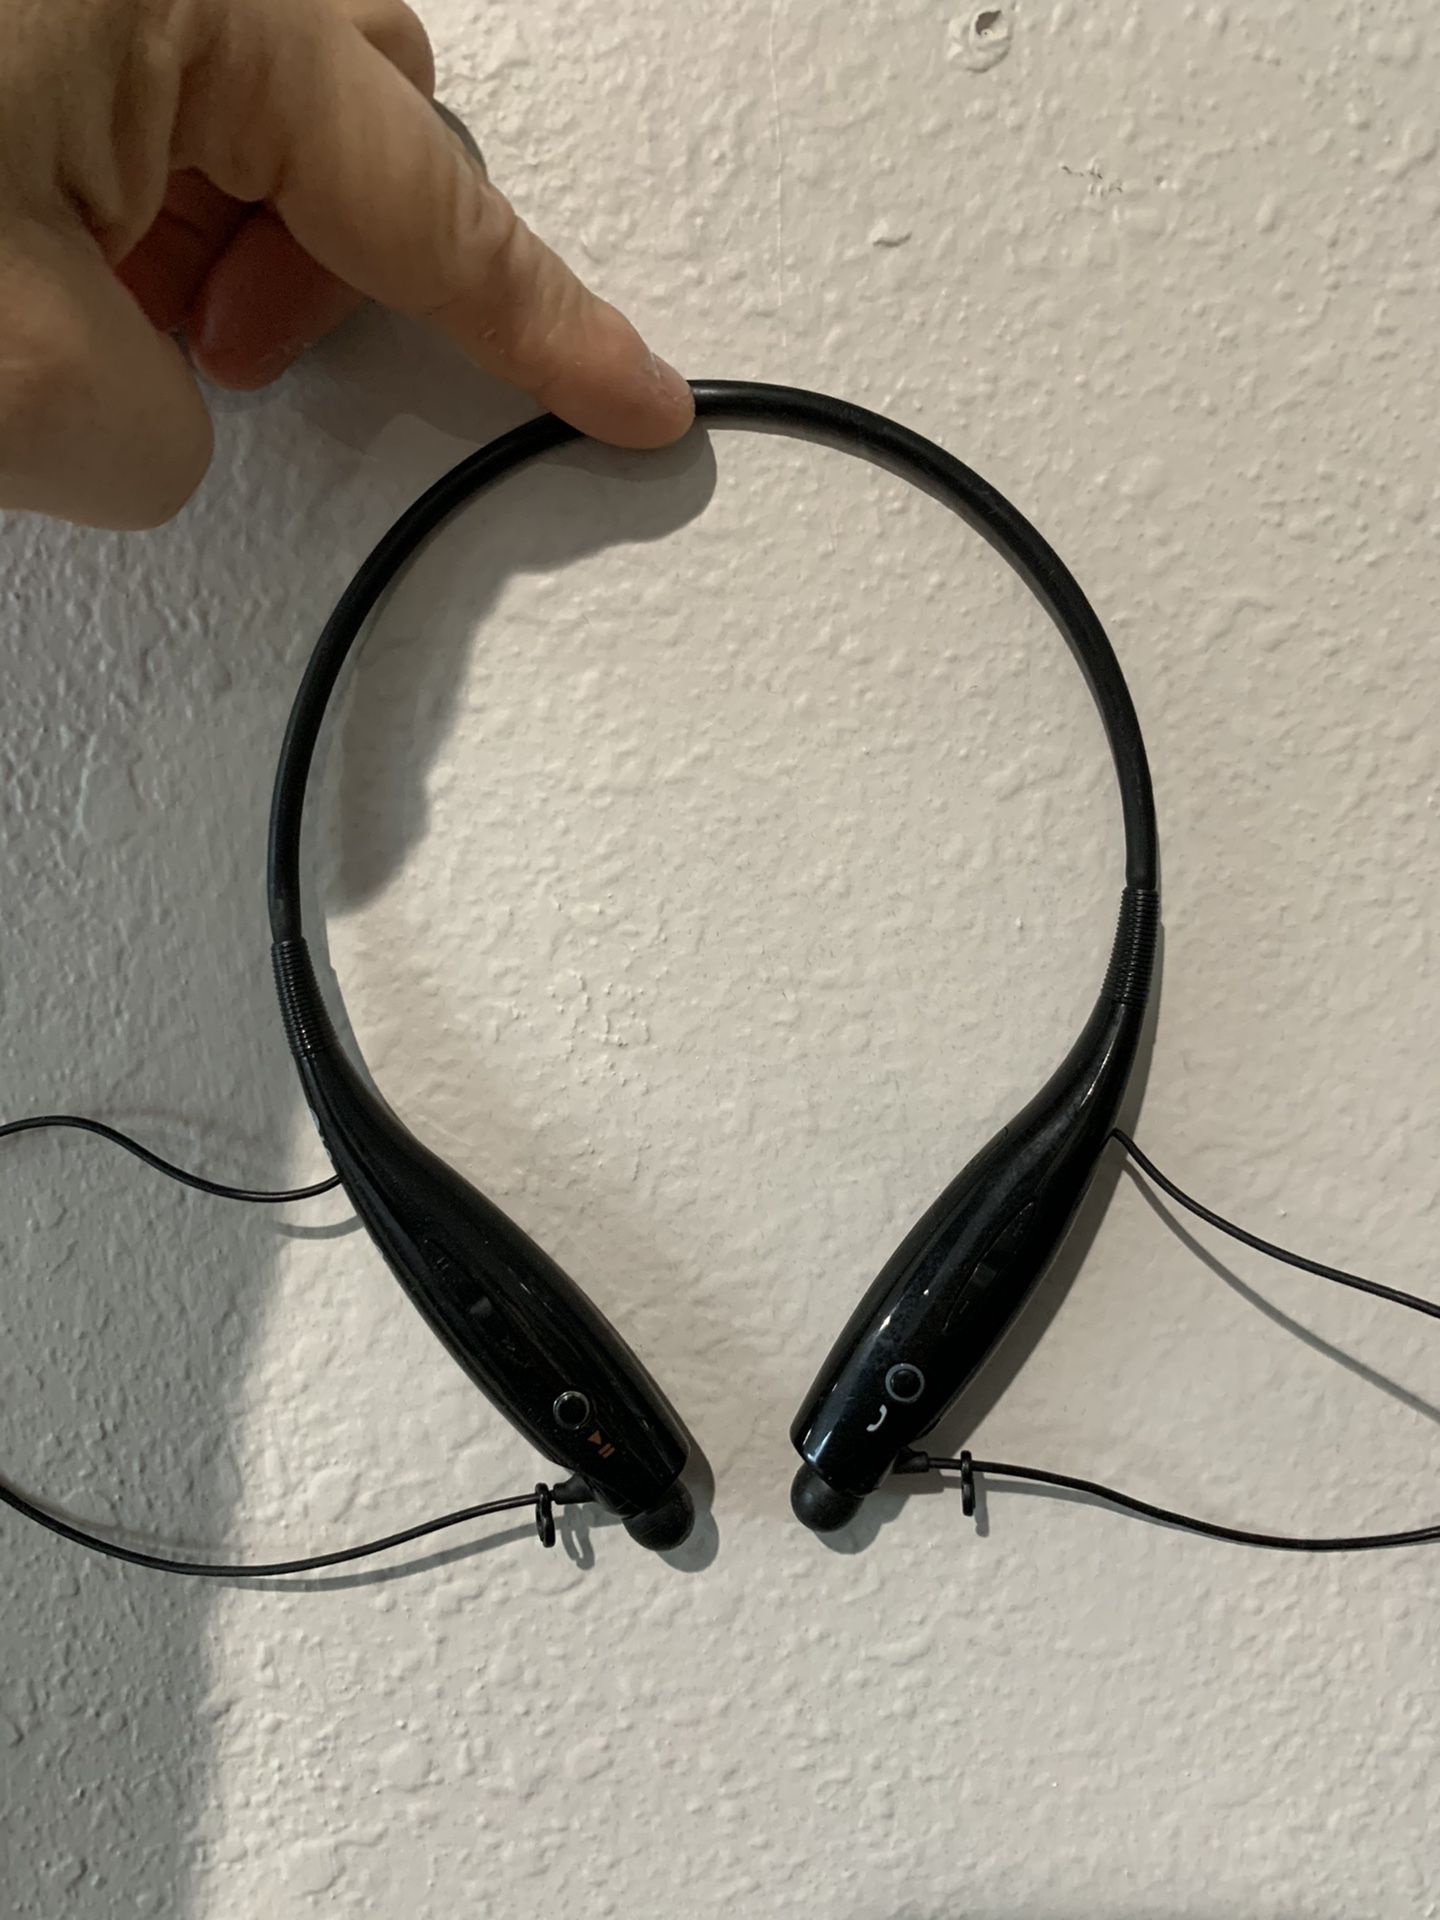 Bluetooth headphone, LG brand